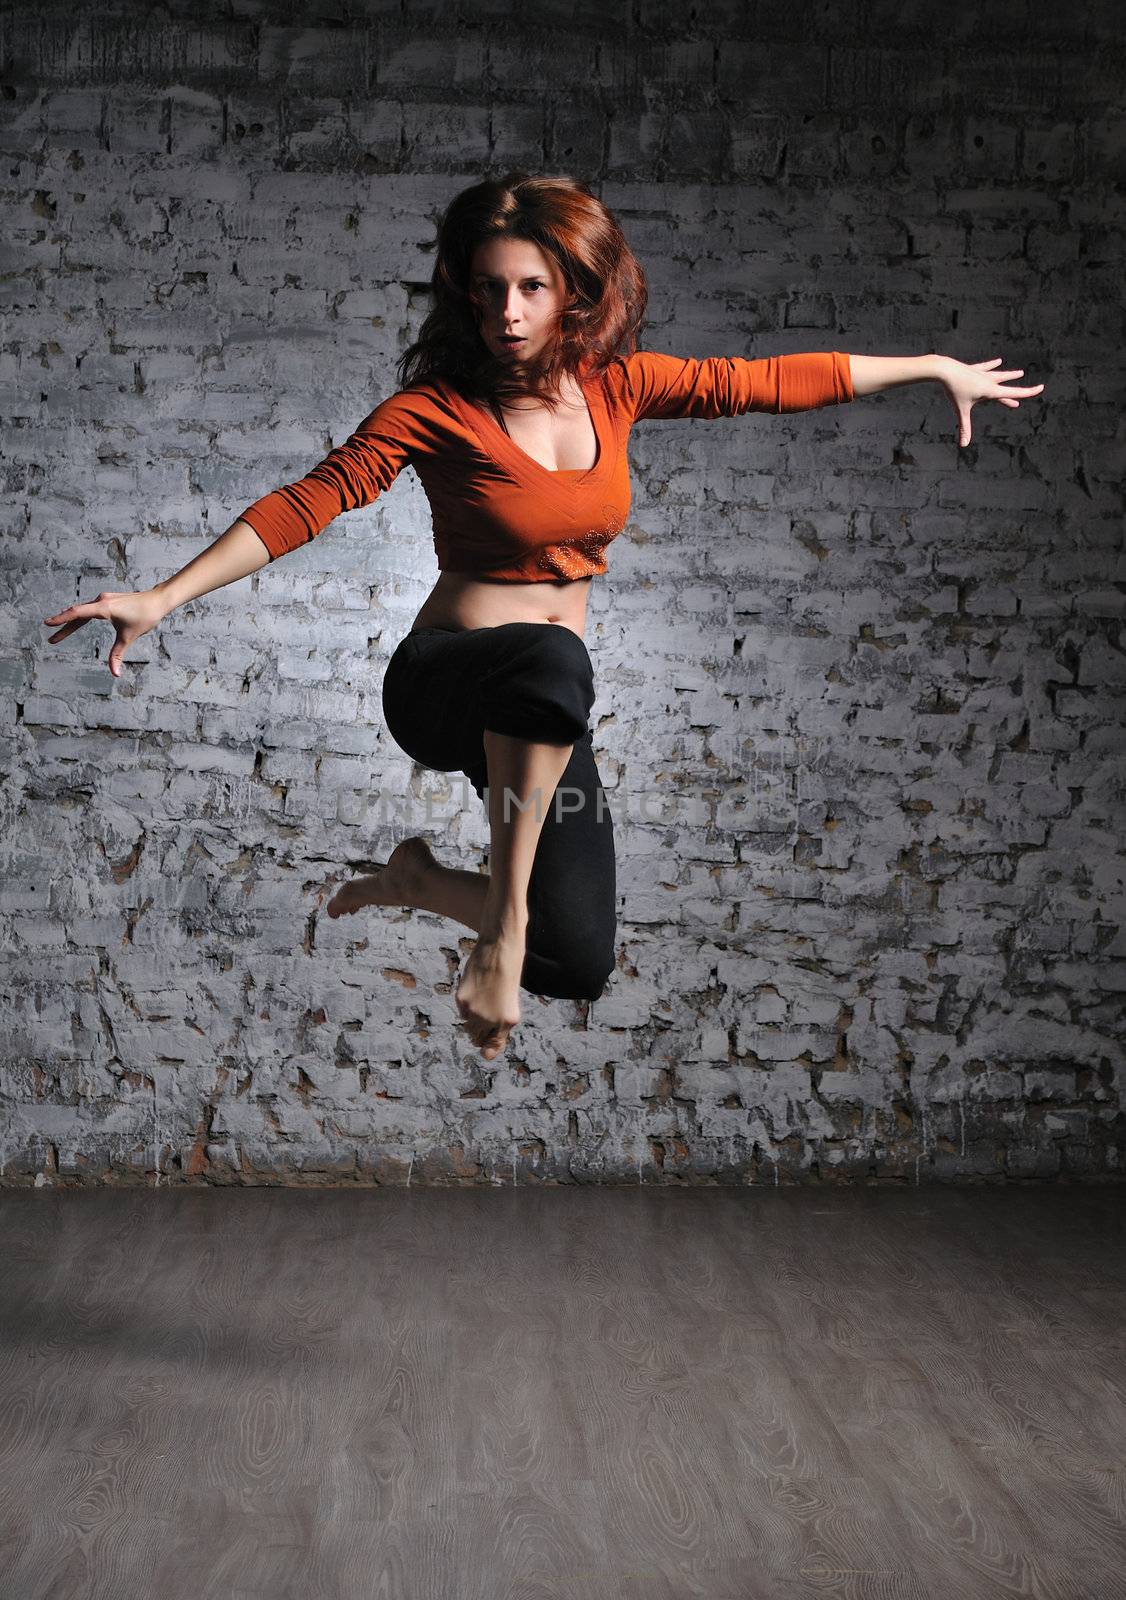 Girl in sportswear jumping by kirs-ua